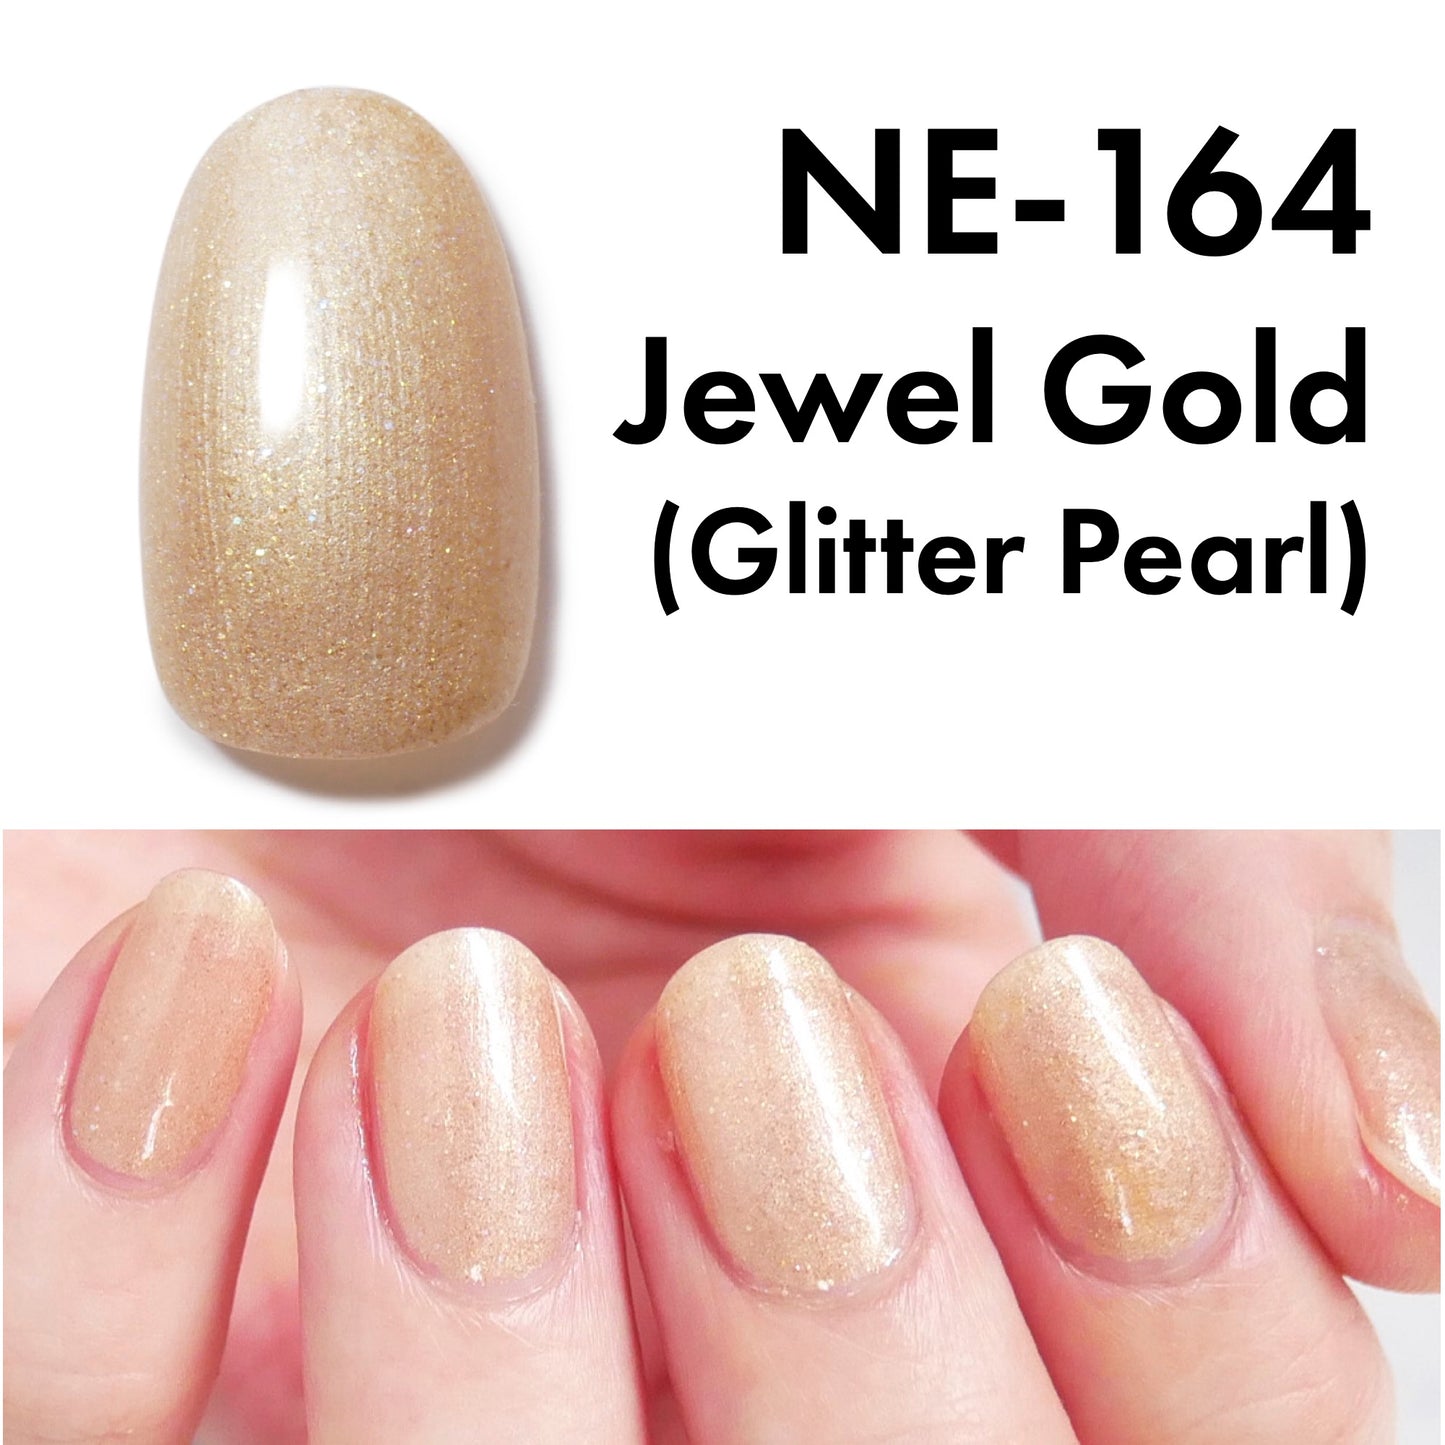 Gel Polish NE-164 "Jewel Gold"